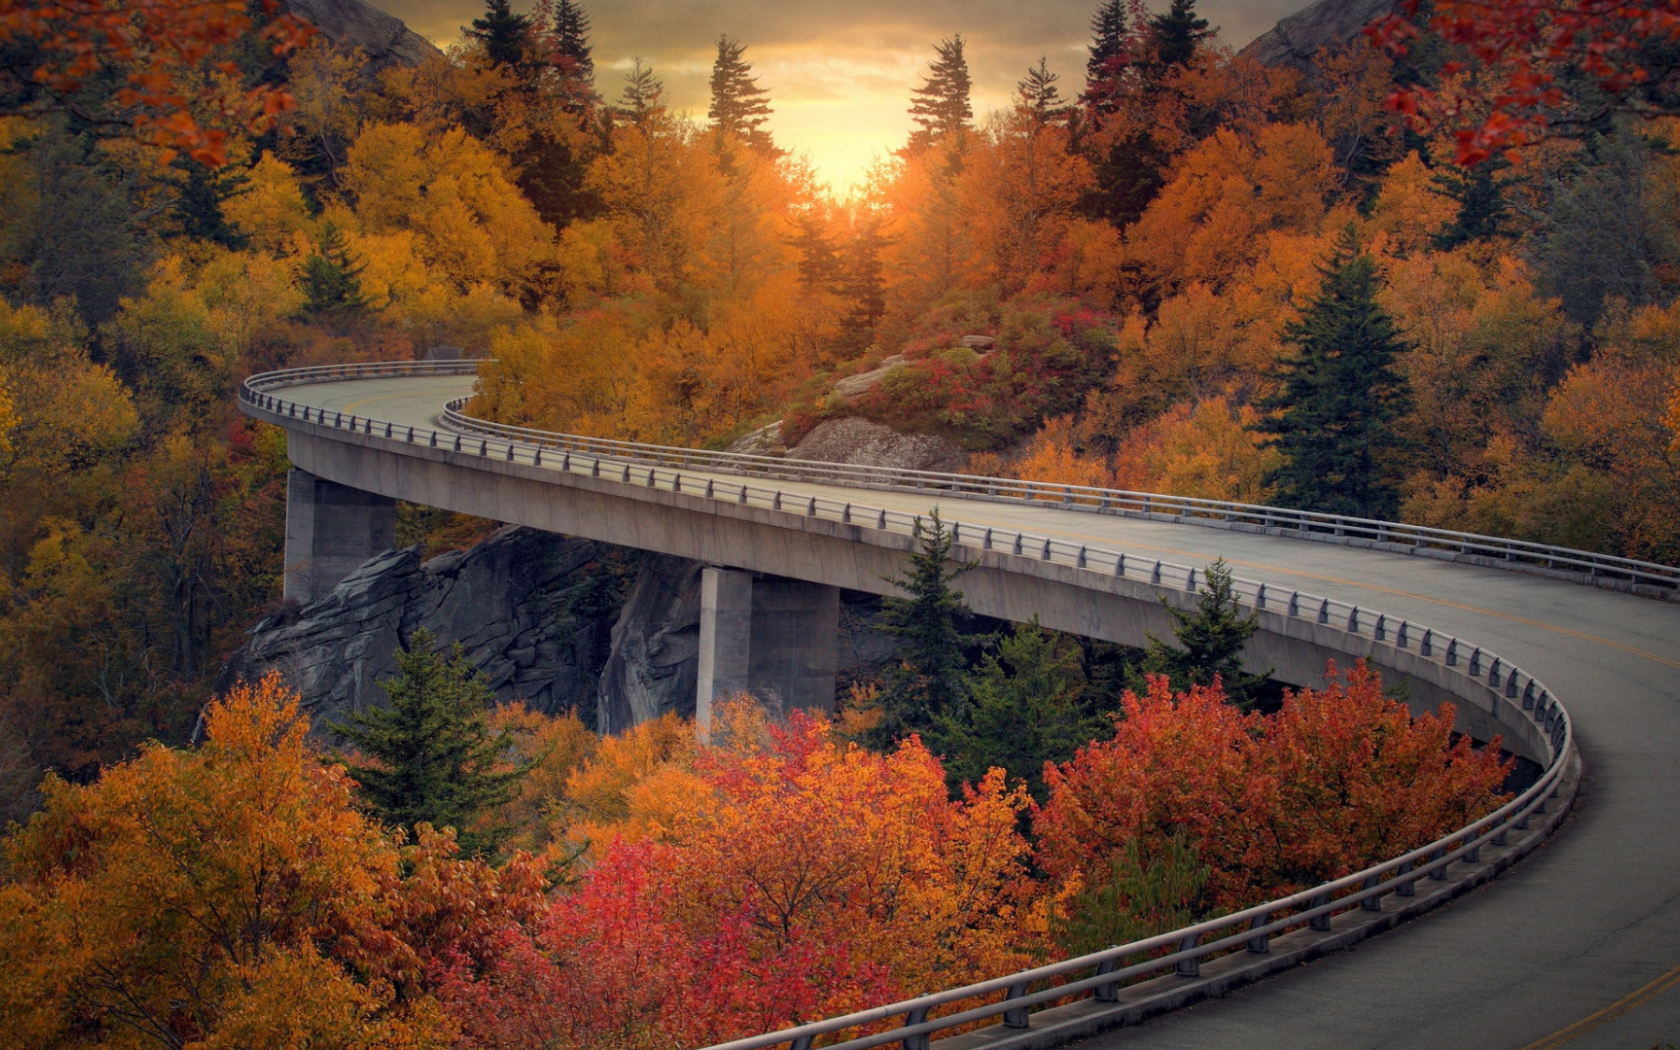 дорога, деревья, осень, листопад